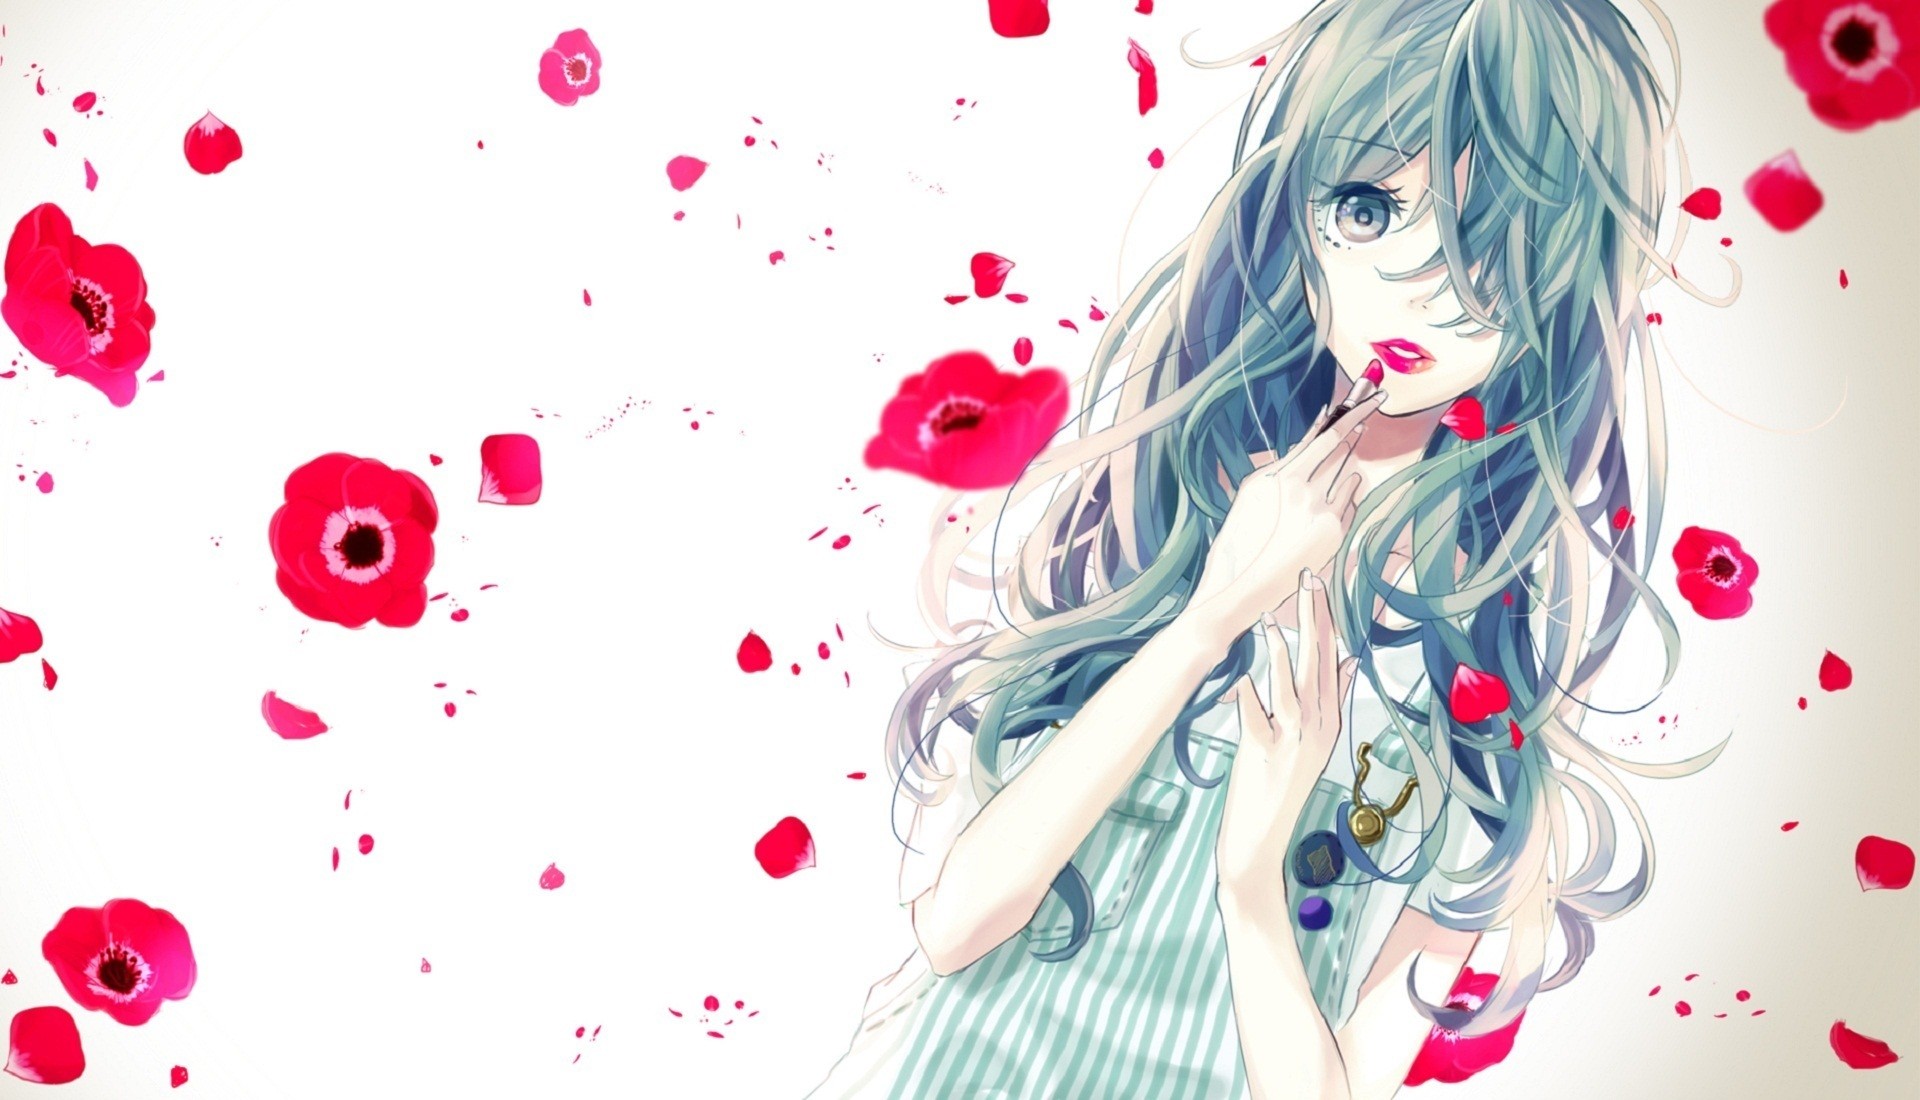 Wallpaper Anime Cute Girly Amazing Windows 4k